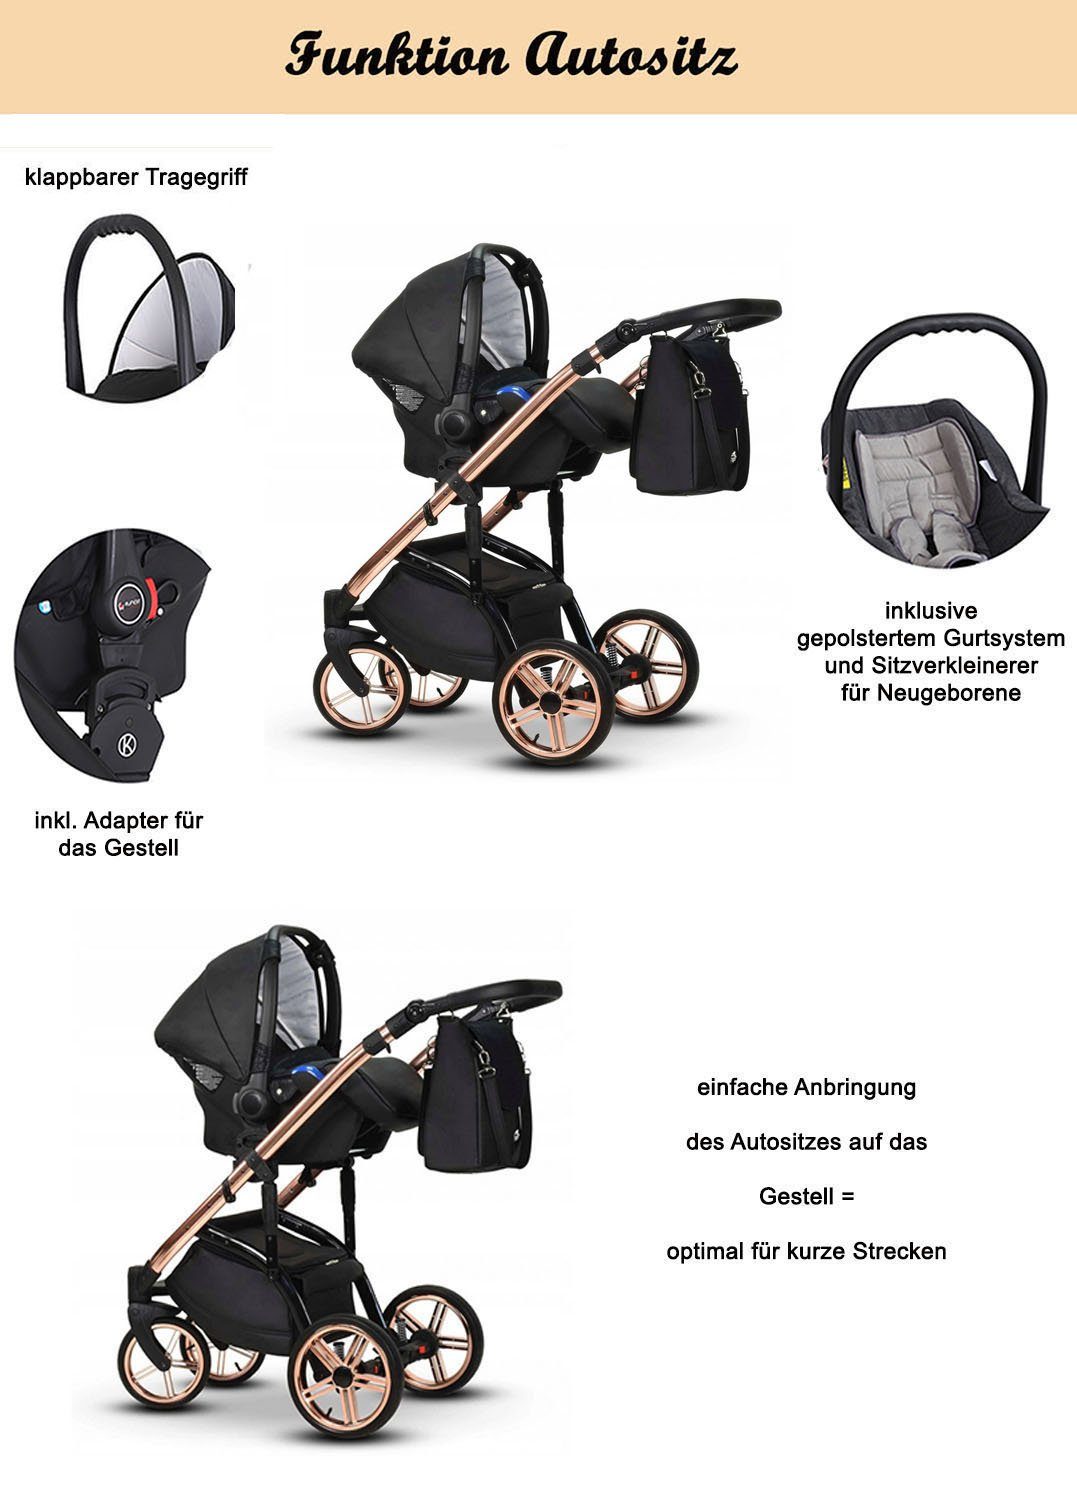 12 Kinderwagen-Set 16 Farben Teile Vip 3 Lux - 1 Kombi-Kinderwagen babies-on-wheels in - Beige-Schwarz-Dekor in